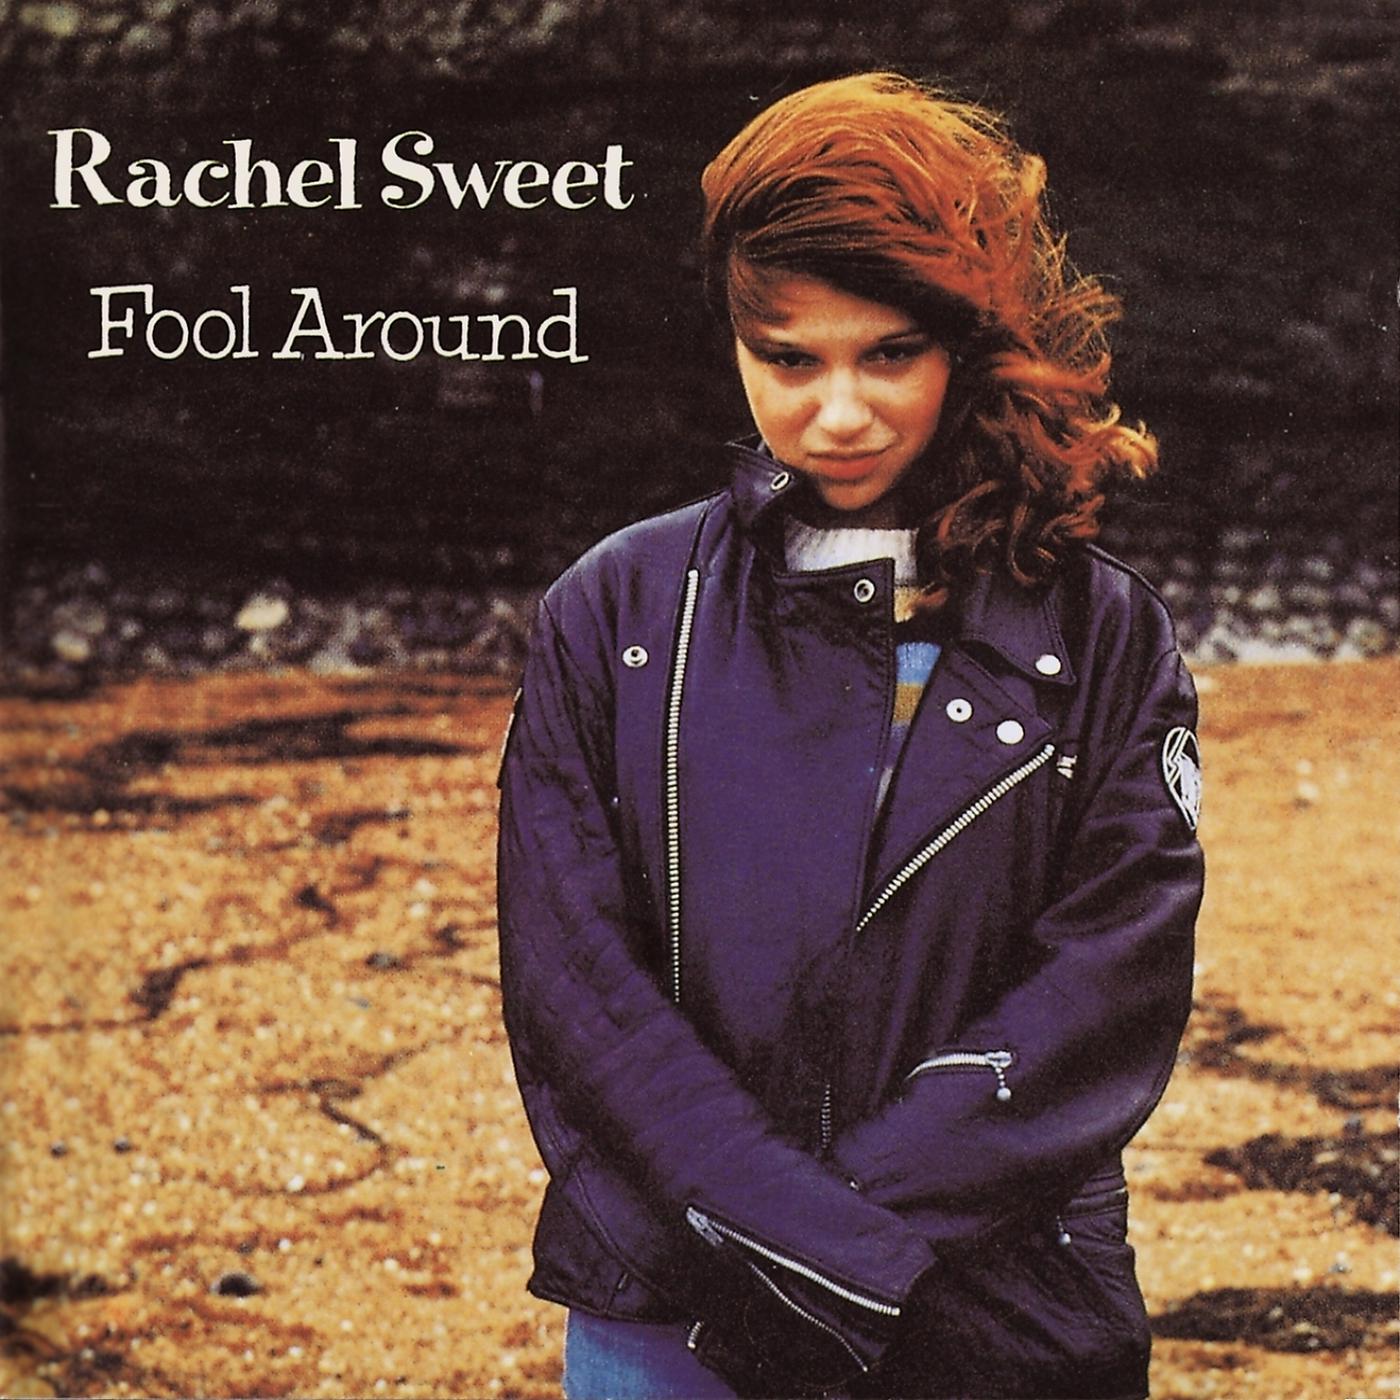 Слушать песни sweet. Rachel Sweet. Rachel Sweet песни. Fool around. Sweet 1978.